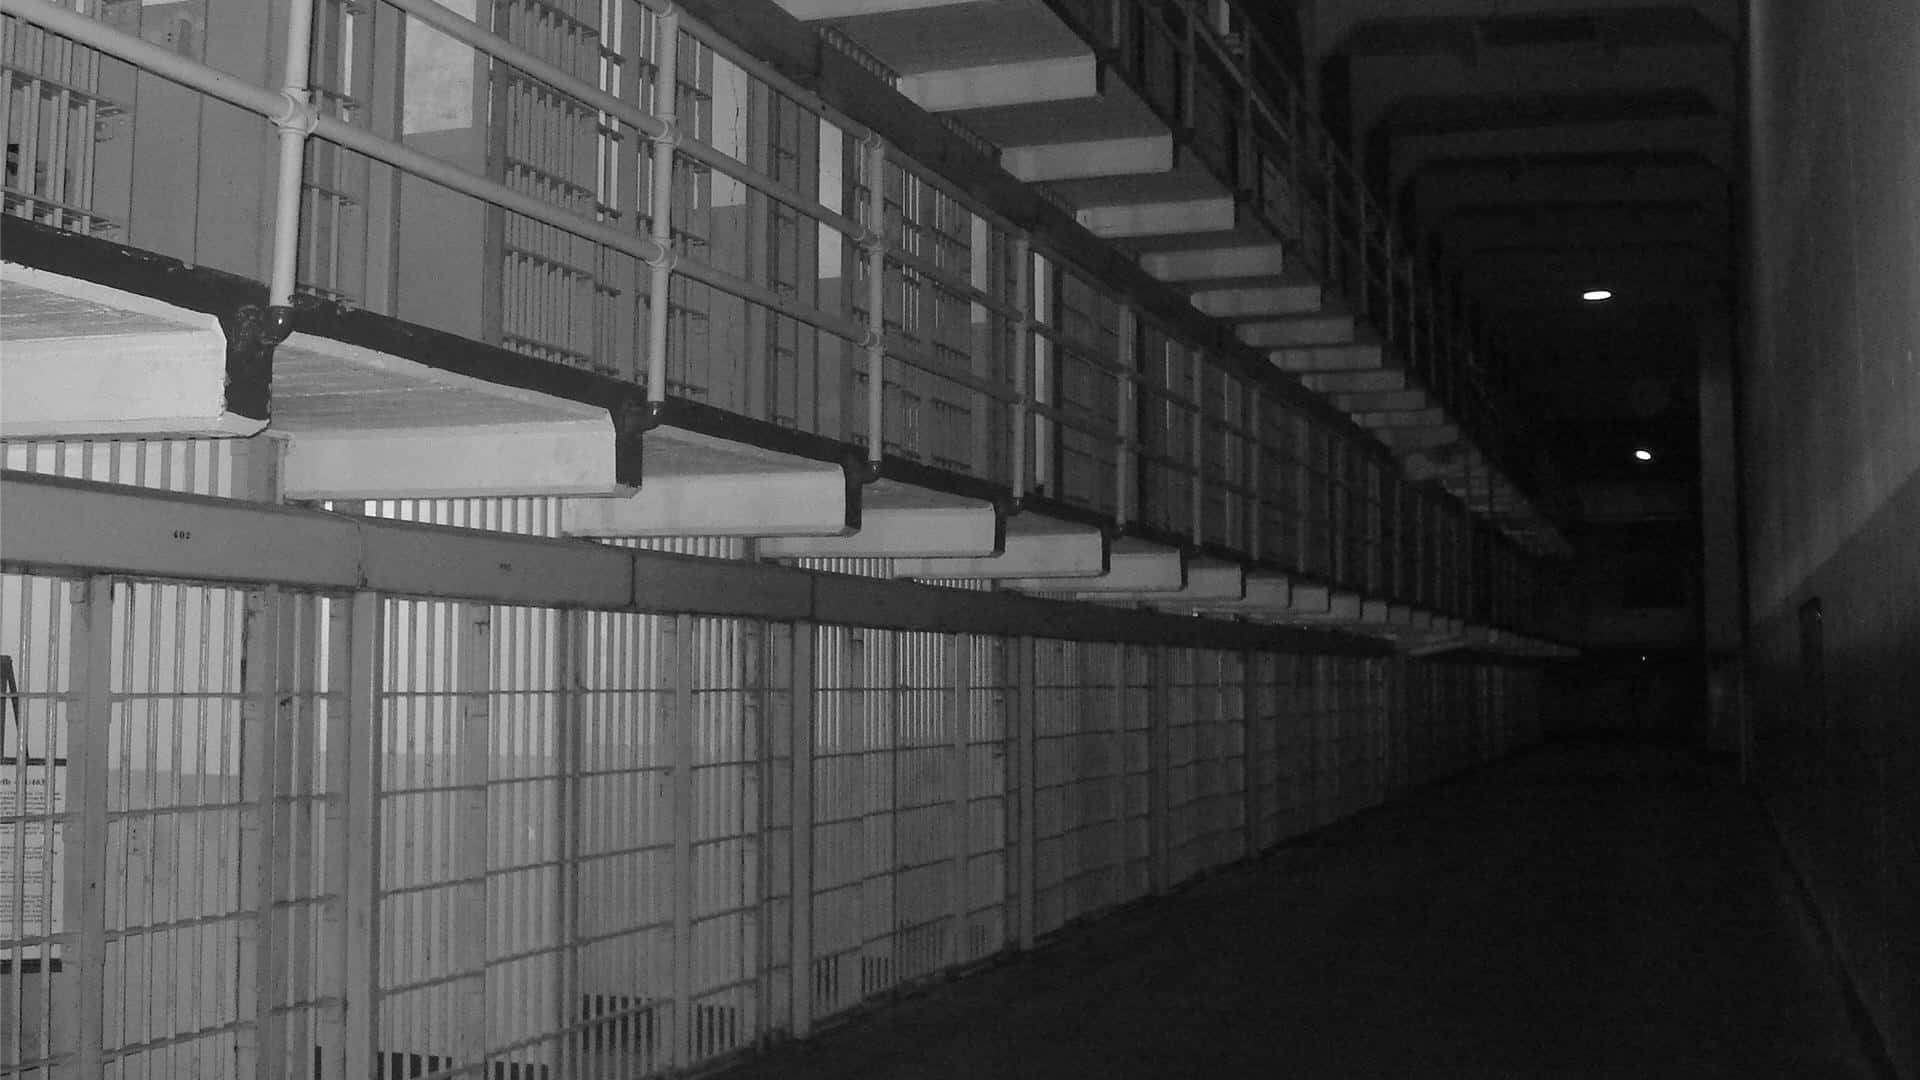 A Prison Cell